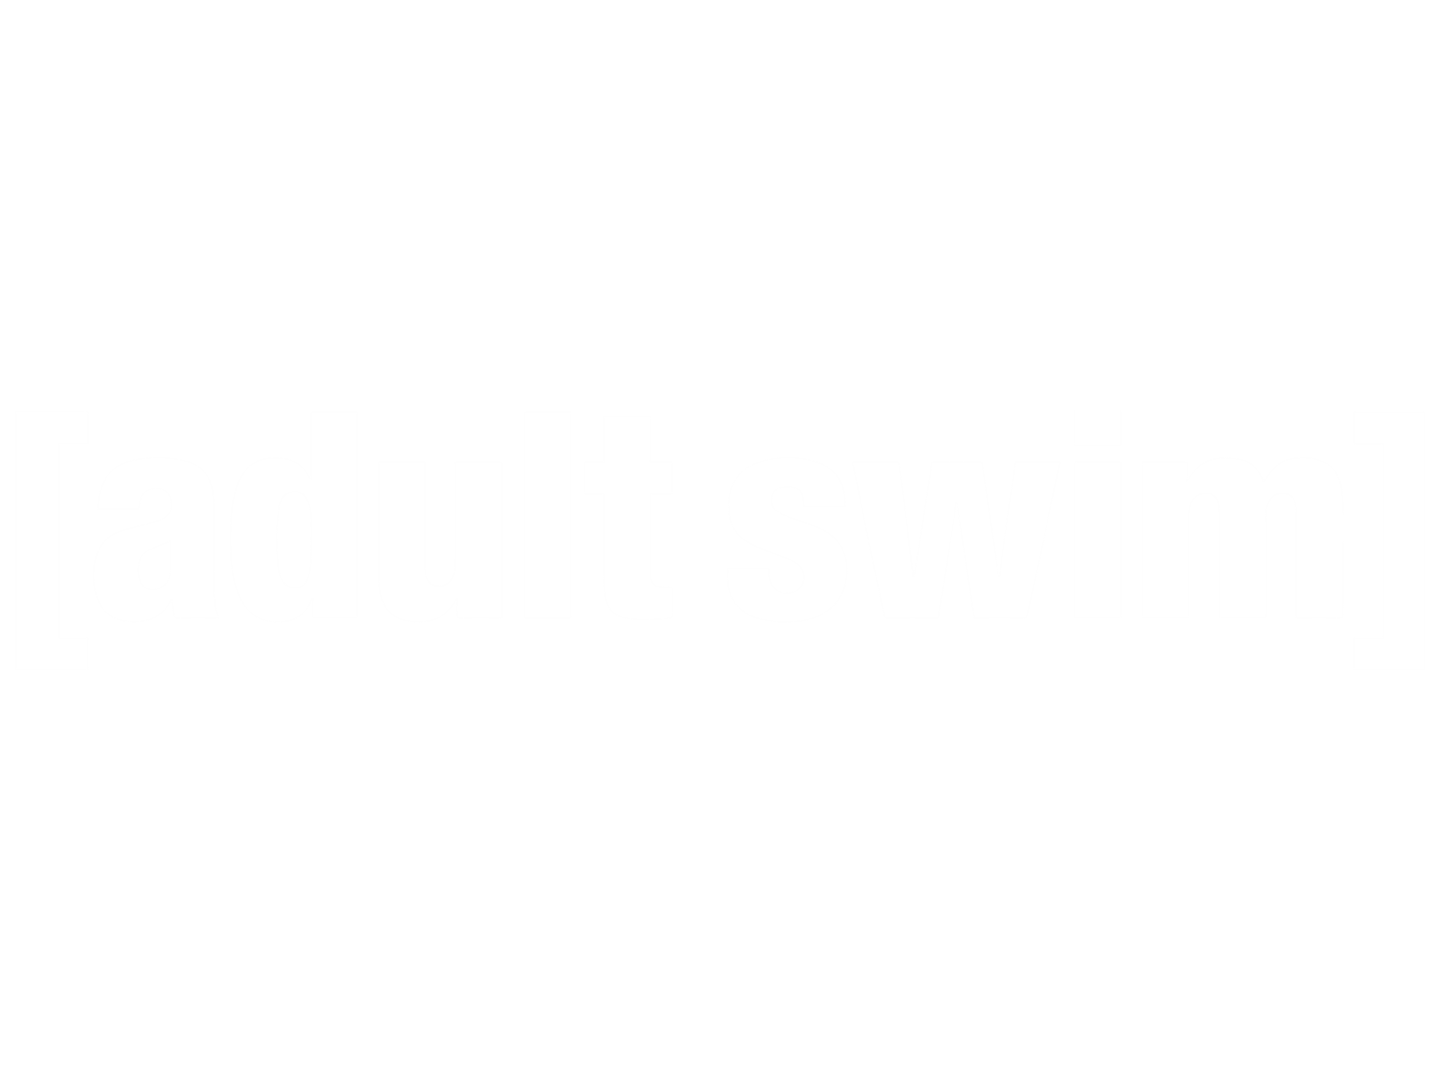 Logo de adult swim (Latinoamérica) en vivo